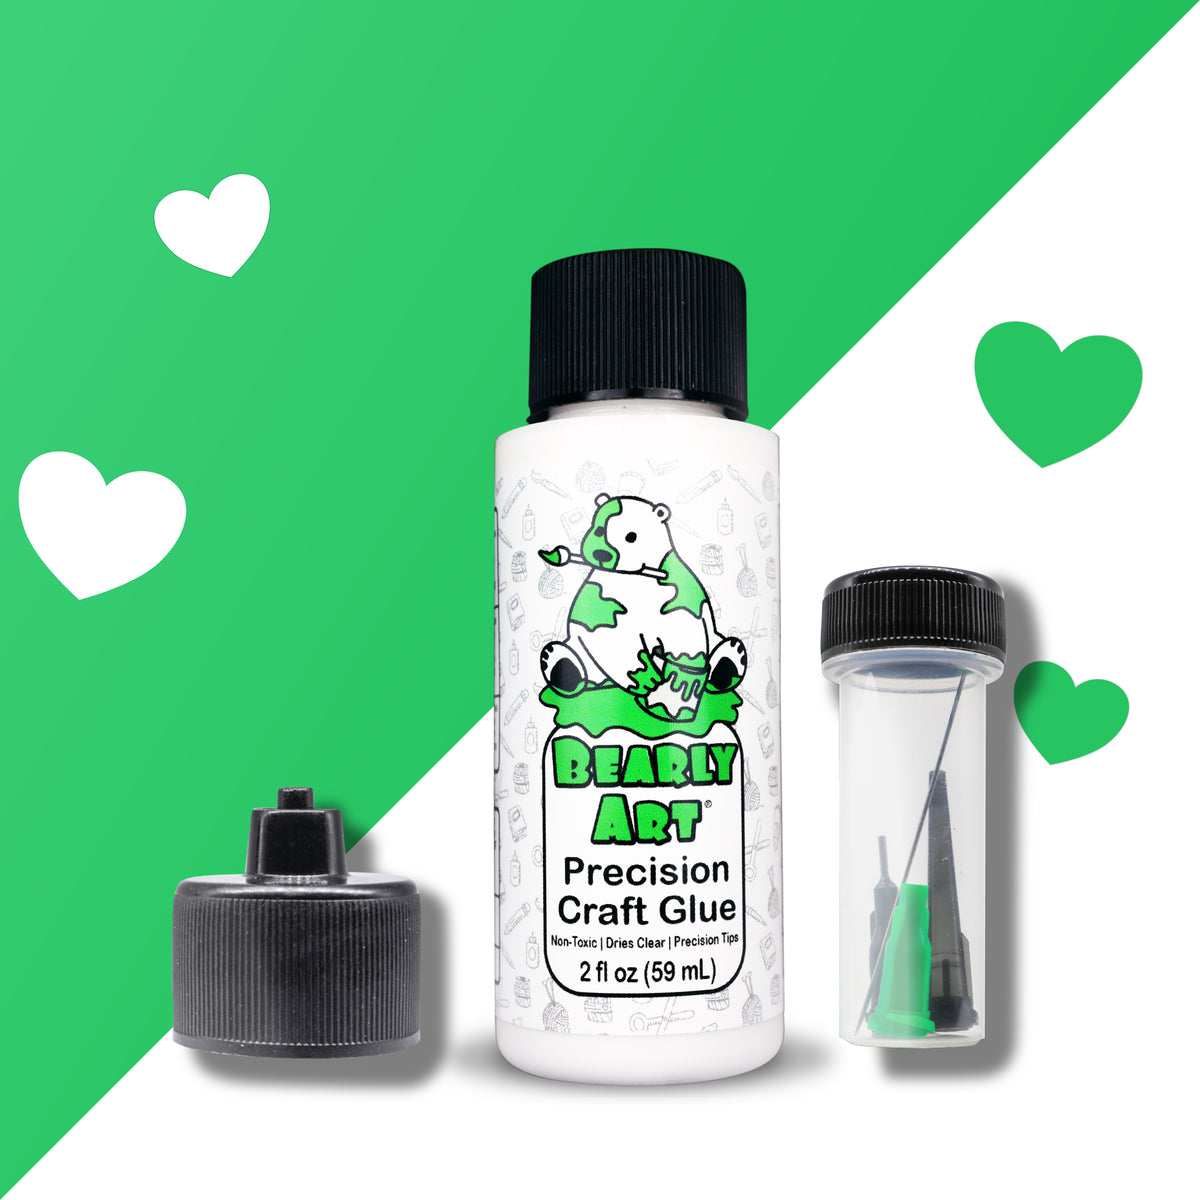 Bearly Art Precision Craft Glue - TIP CAP